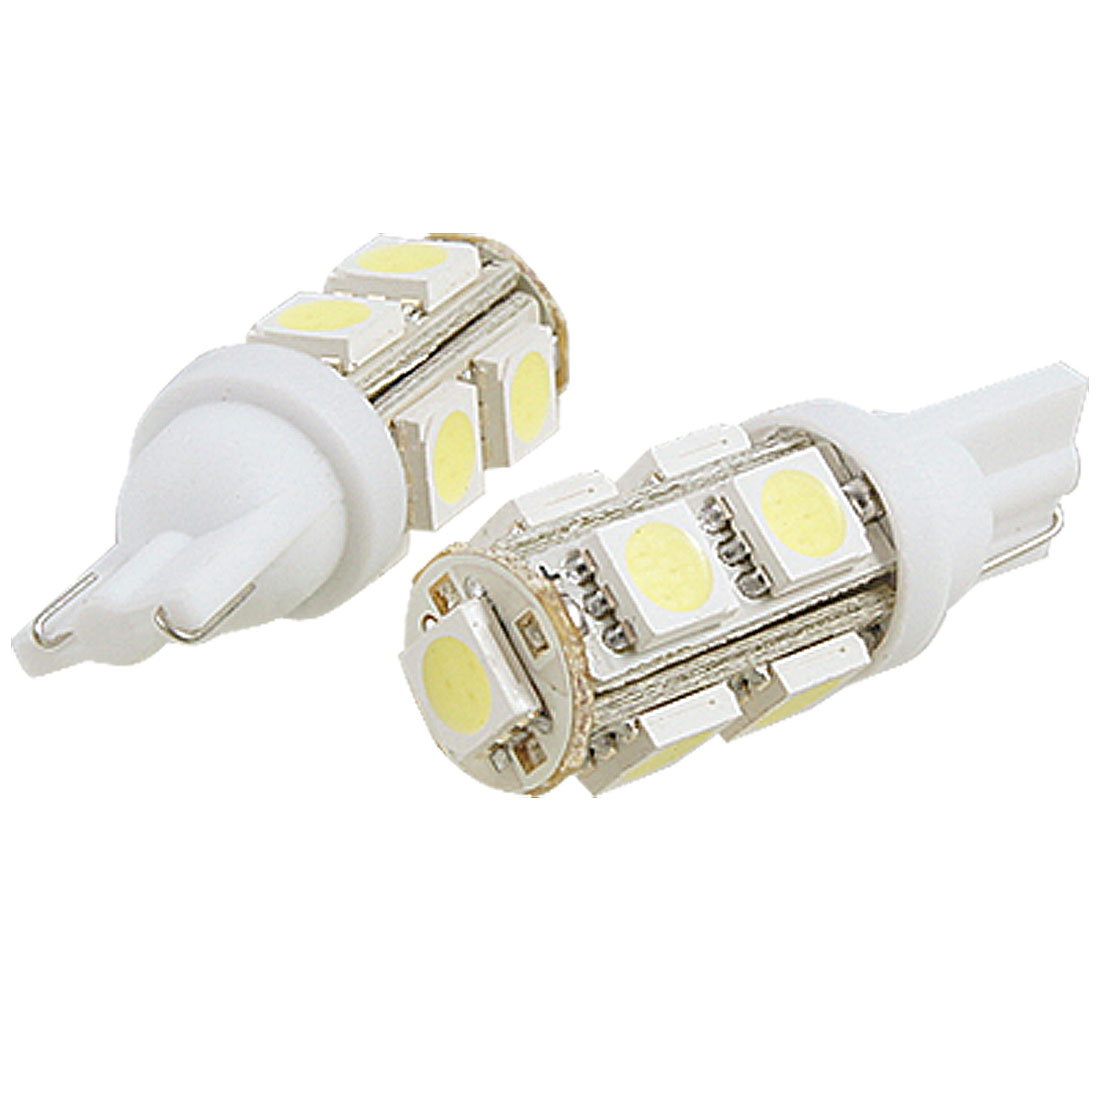 Unique Bargains 2pcs T10 194 168 Car 9 5050 SMD LED Side Tail White Lights Bulbs Lamps 12V